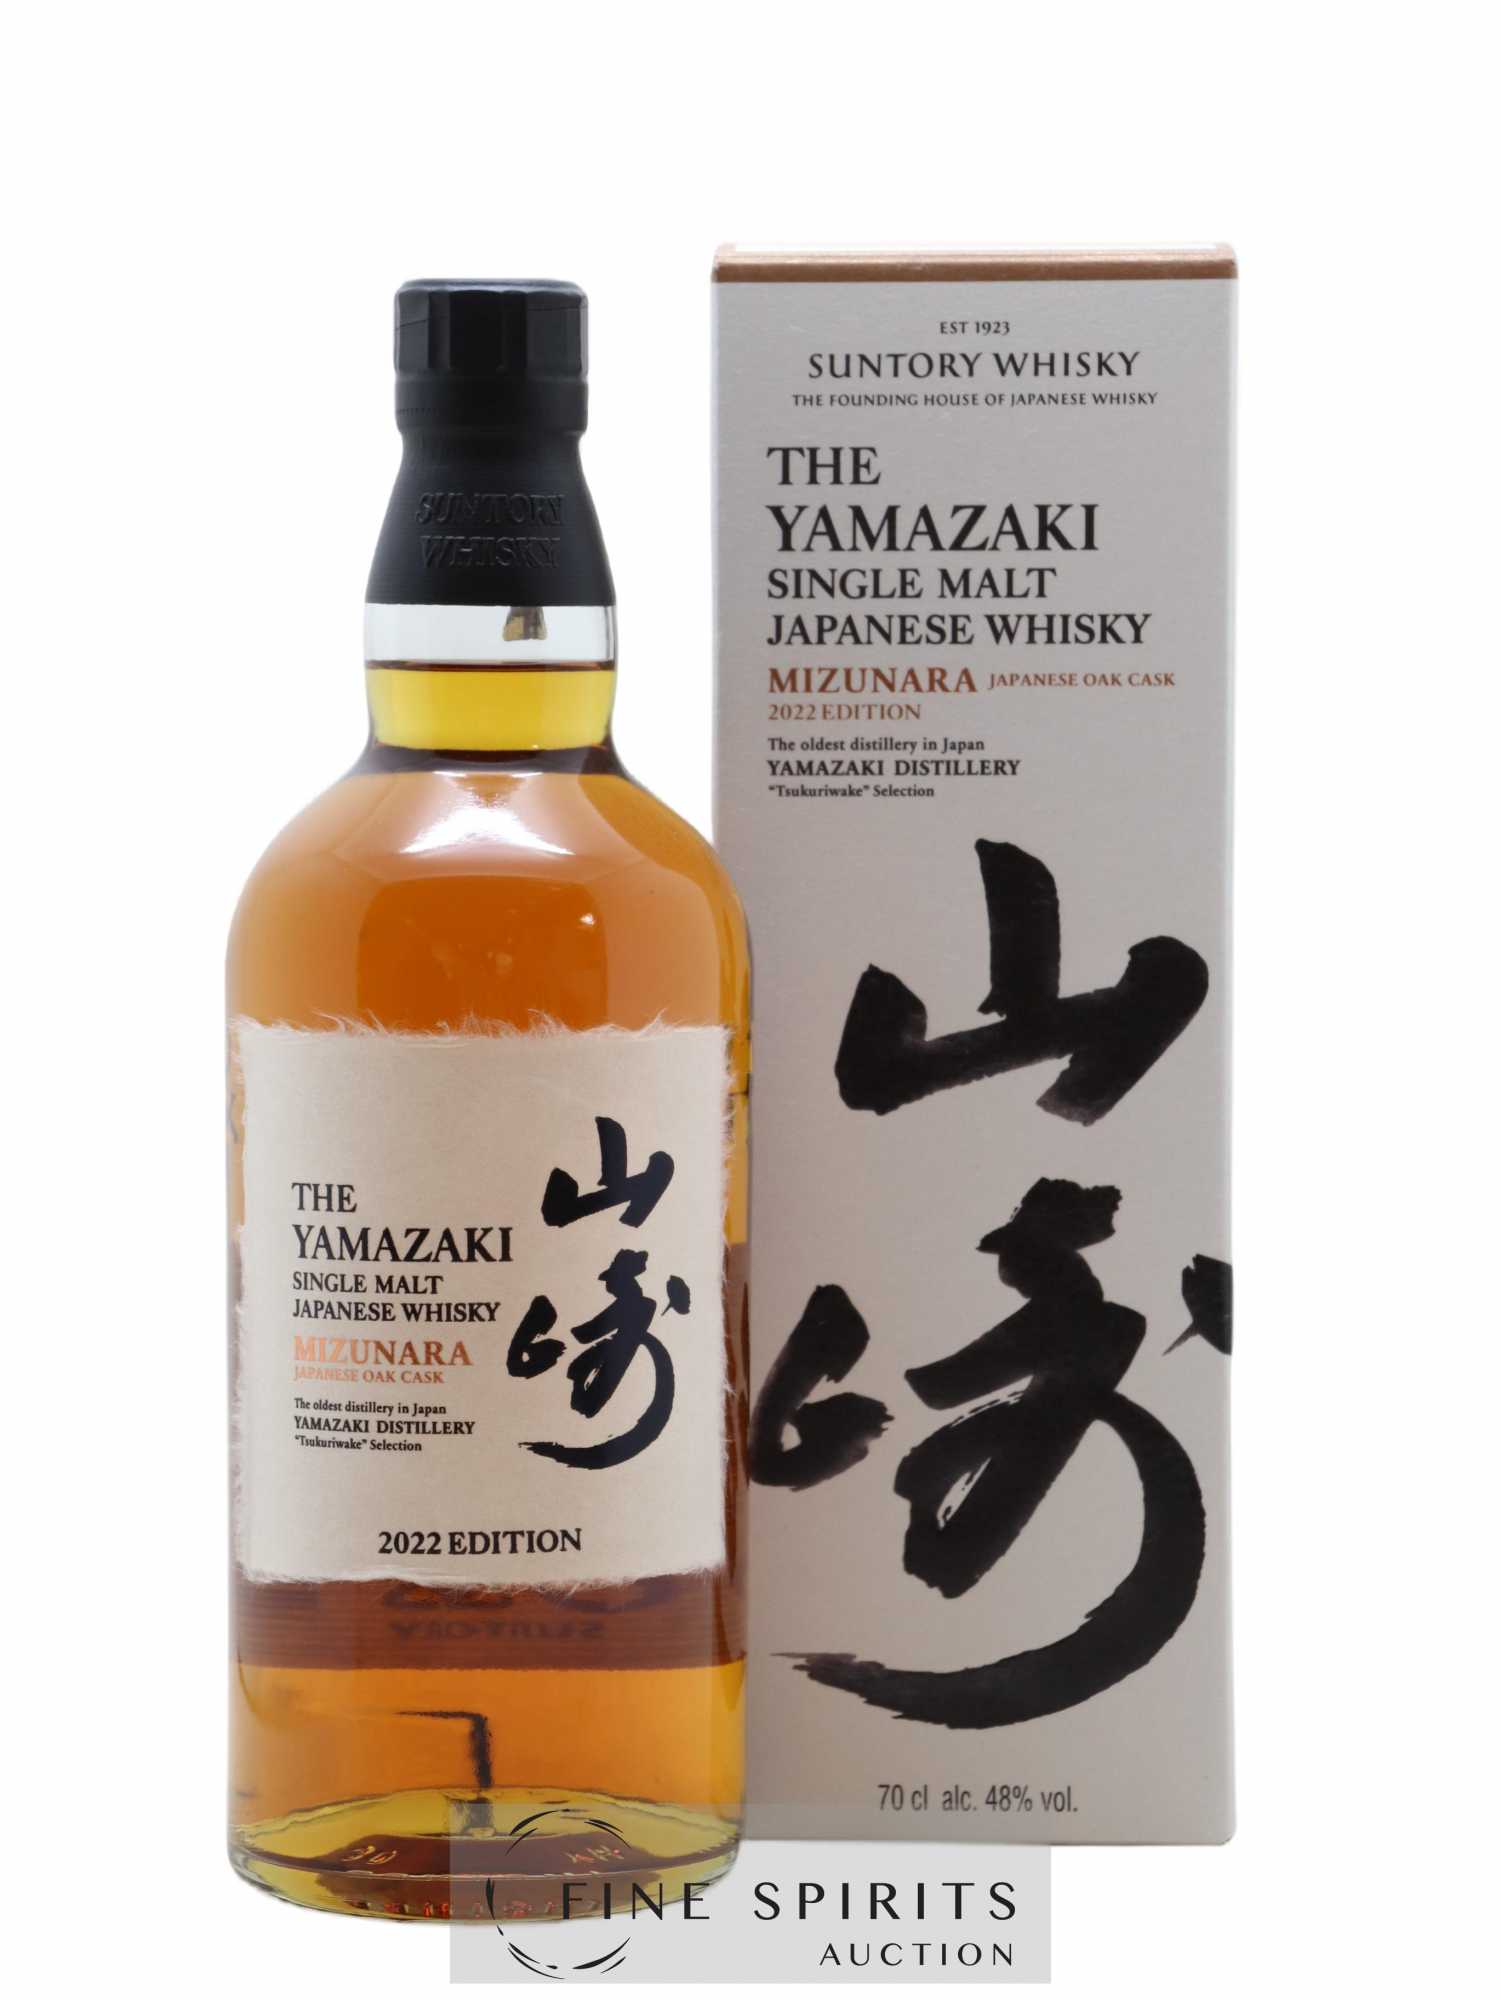 Yamazaki Of. Mizunara Japanese Oak Cask 2022 Edition Tsukuriwake Selection 